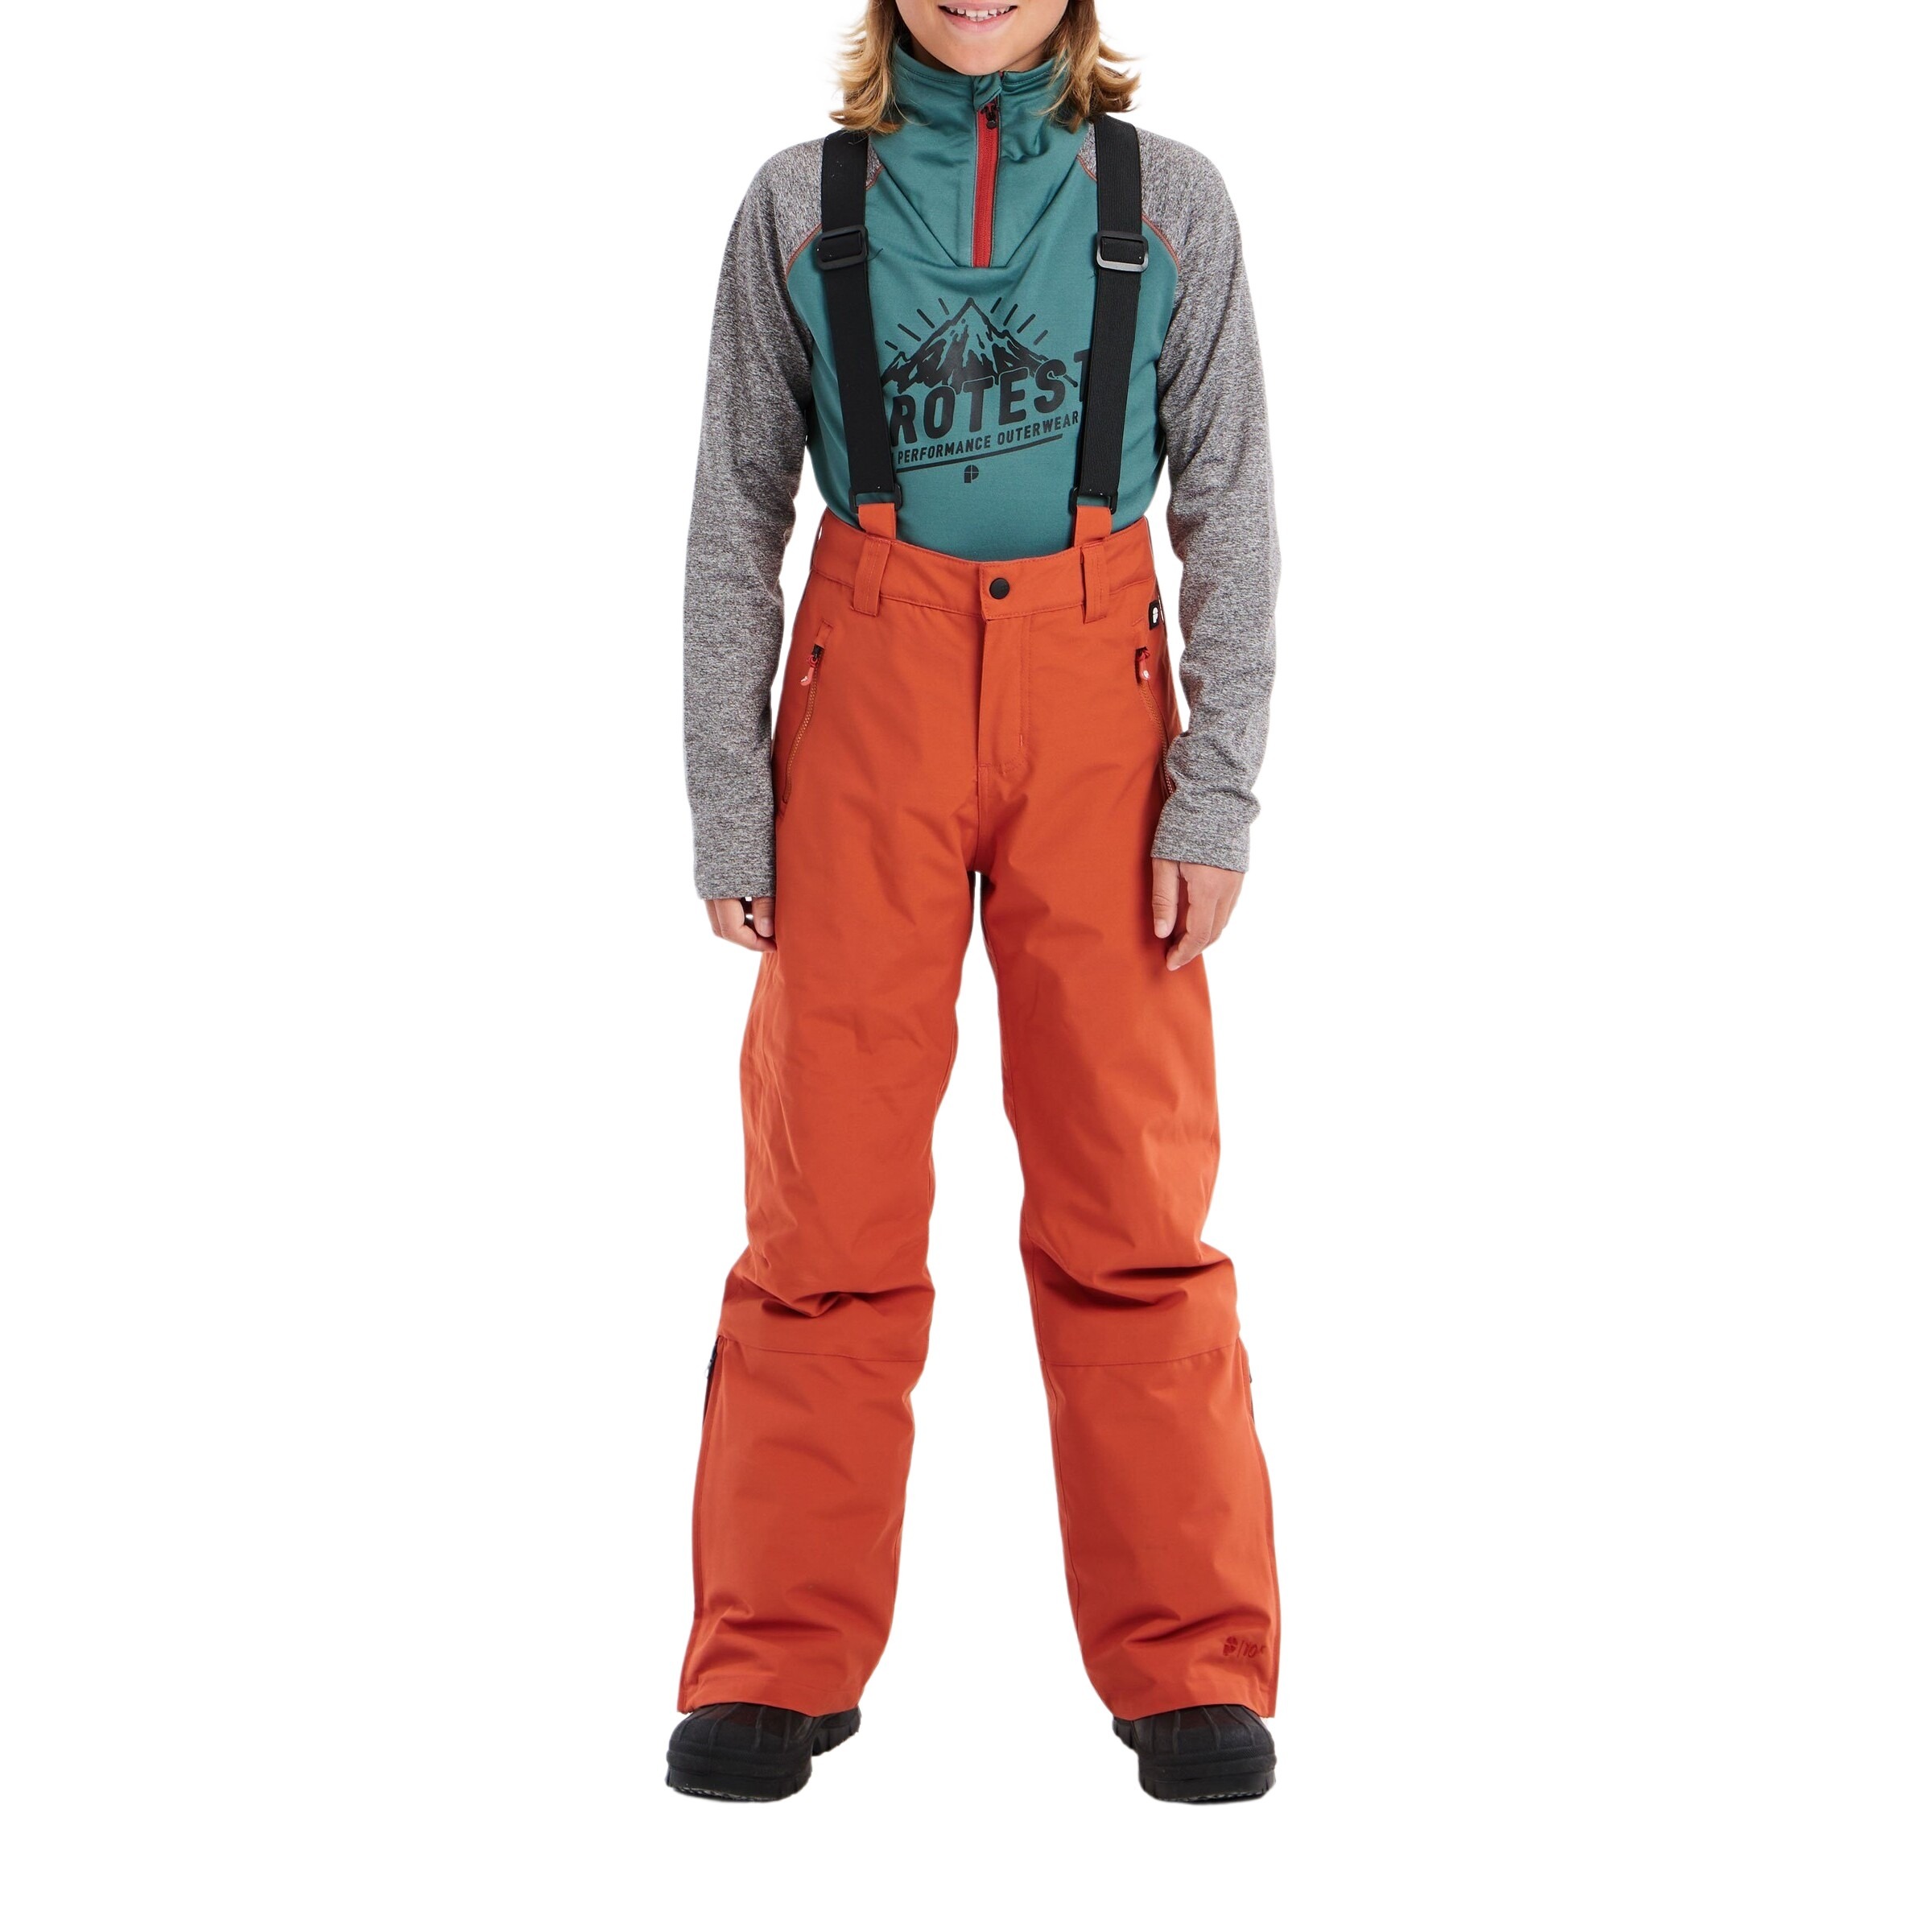 Pantalon de ski enfant Protest Spiket